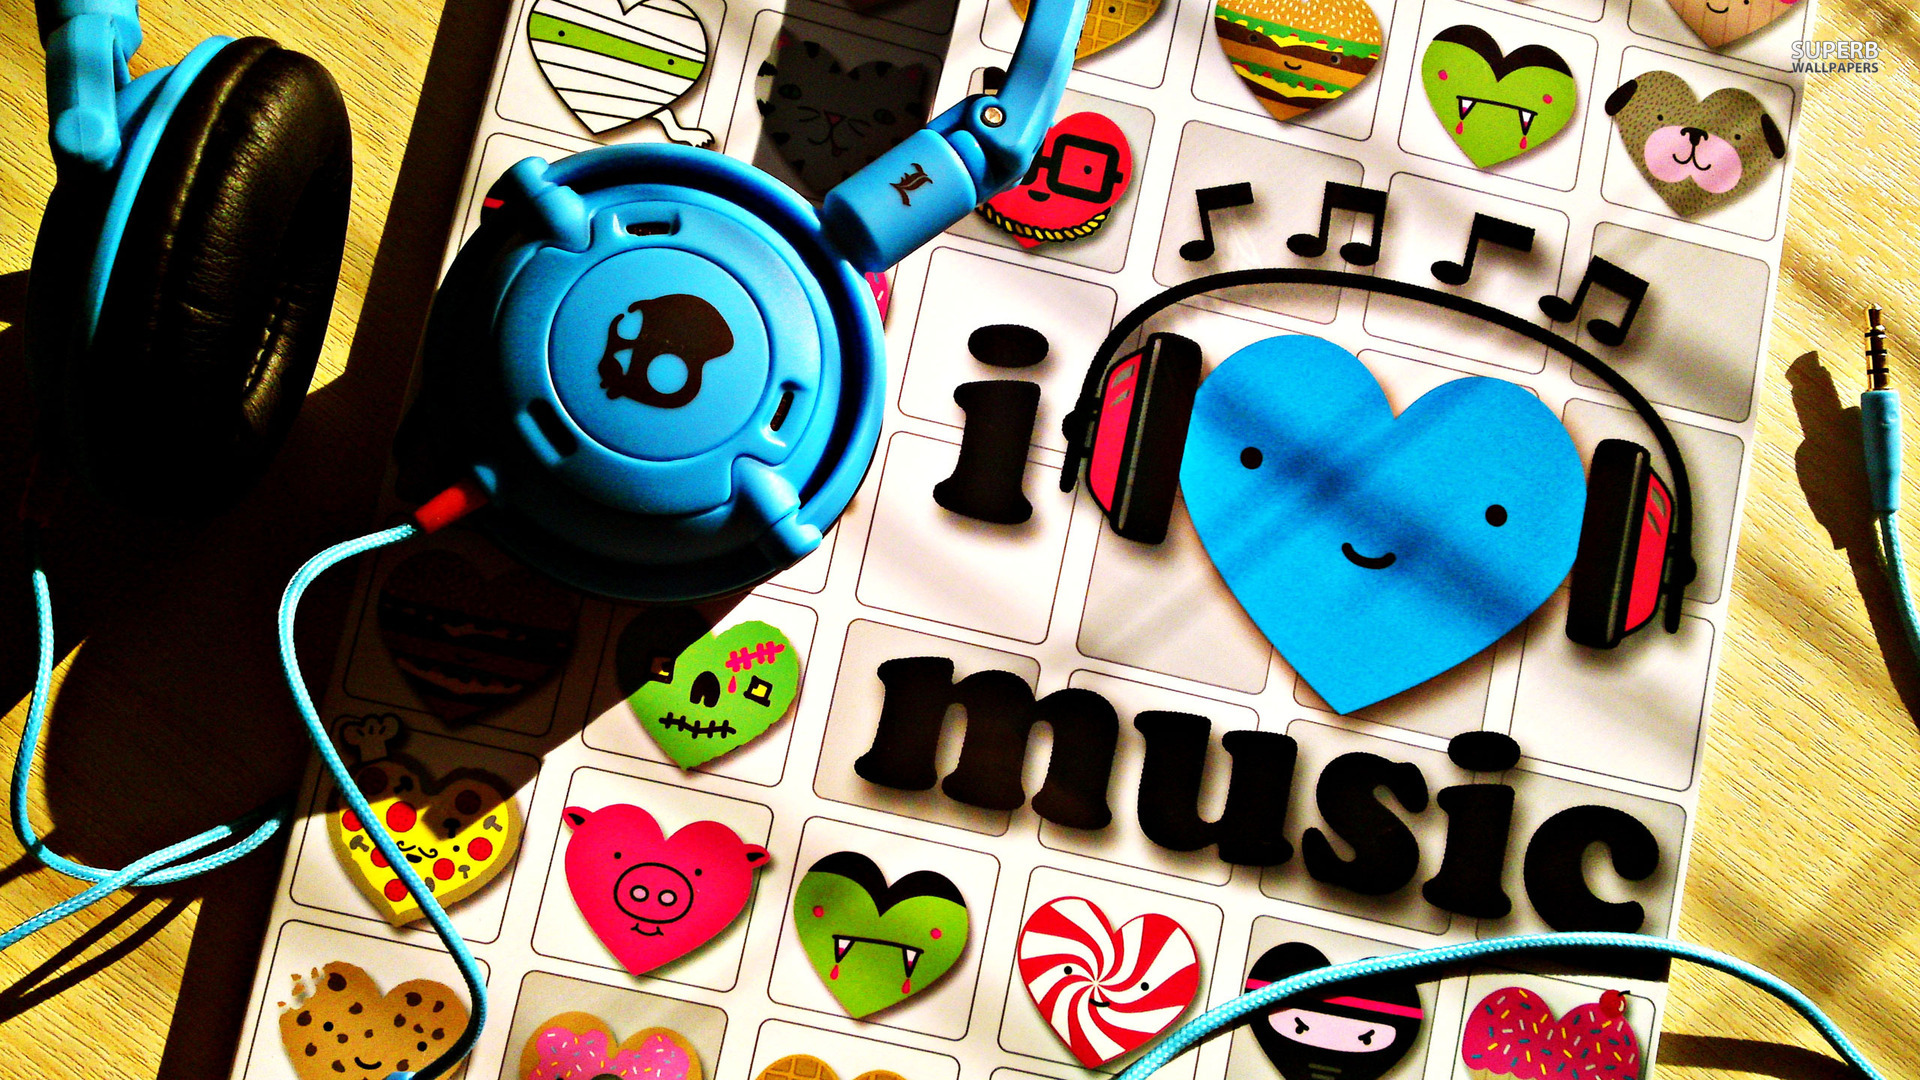 I love music wallpaper - Music wallpapers - #23671